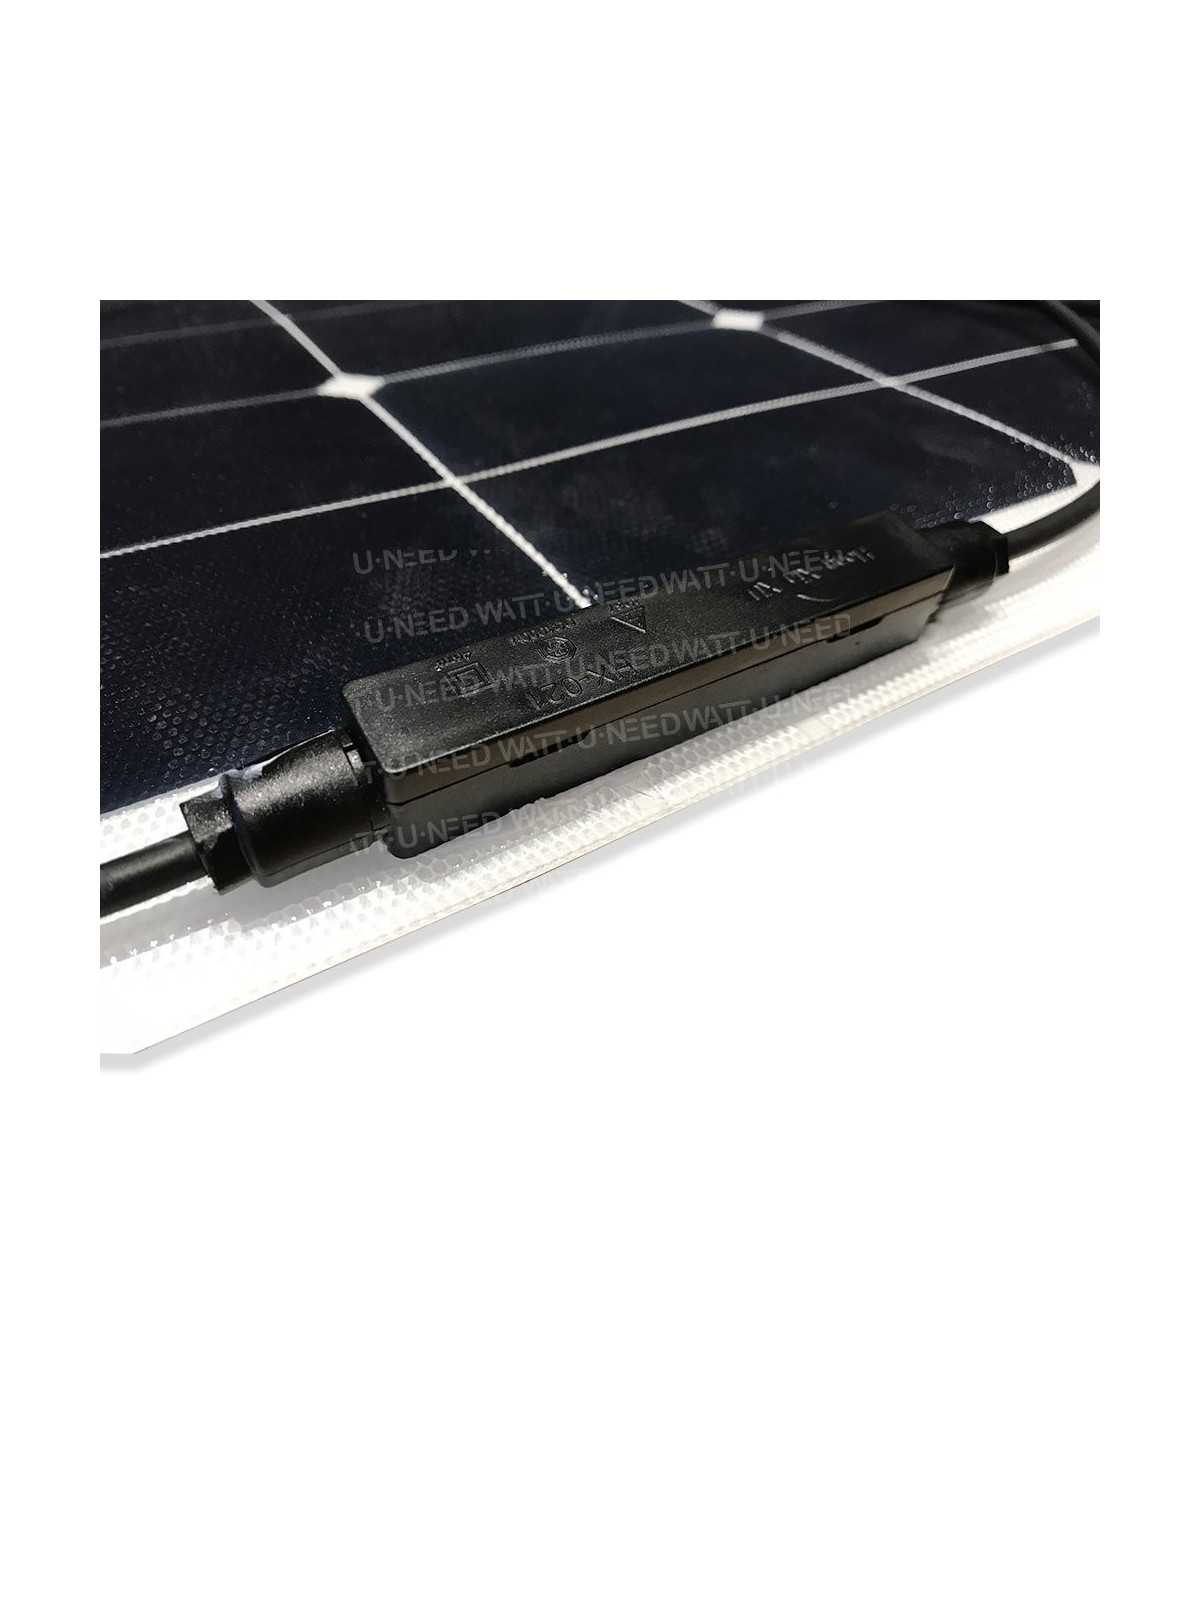 MX FLEX Protect 60Wp 12V panel solar Back Contact